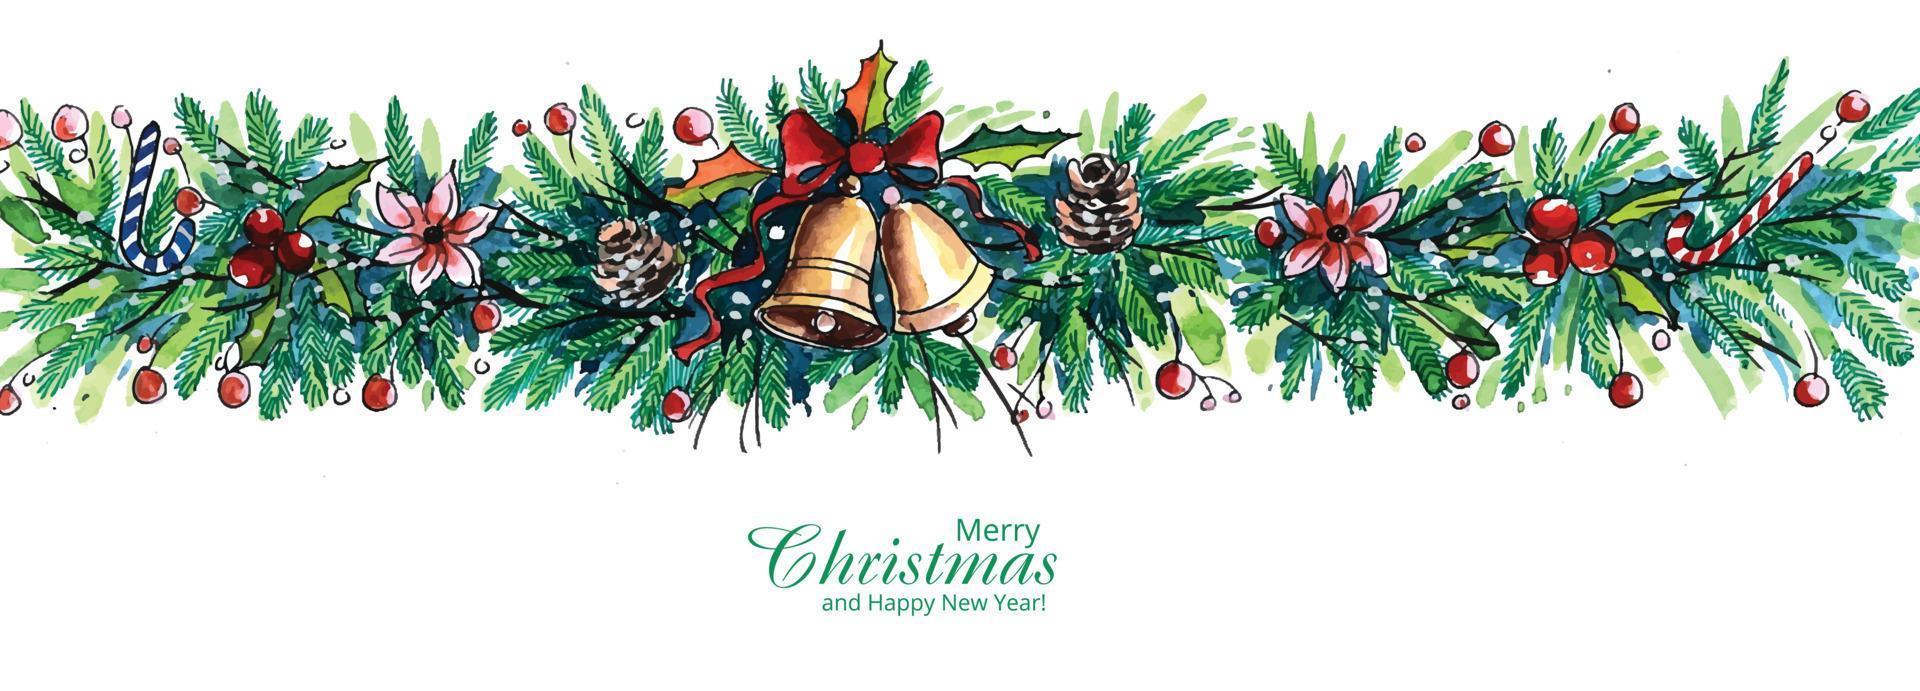 diseño de tarjeta de banner de guirnalda de navidad decorativa vector